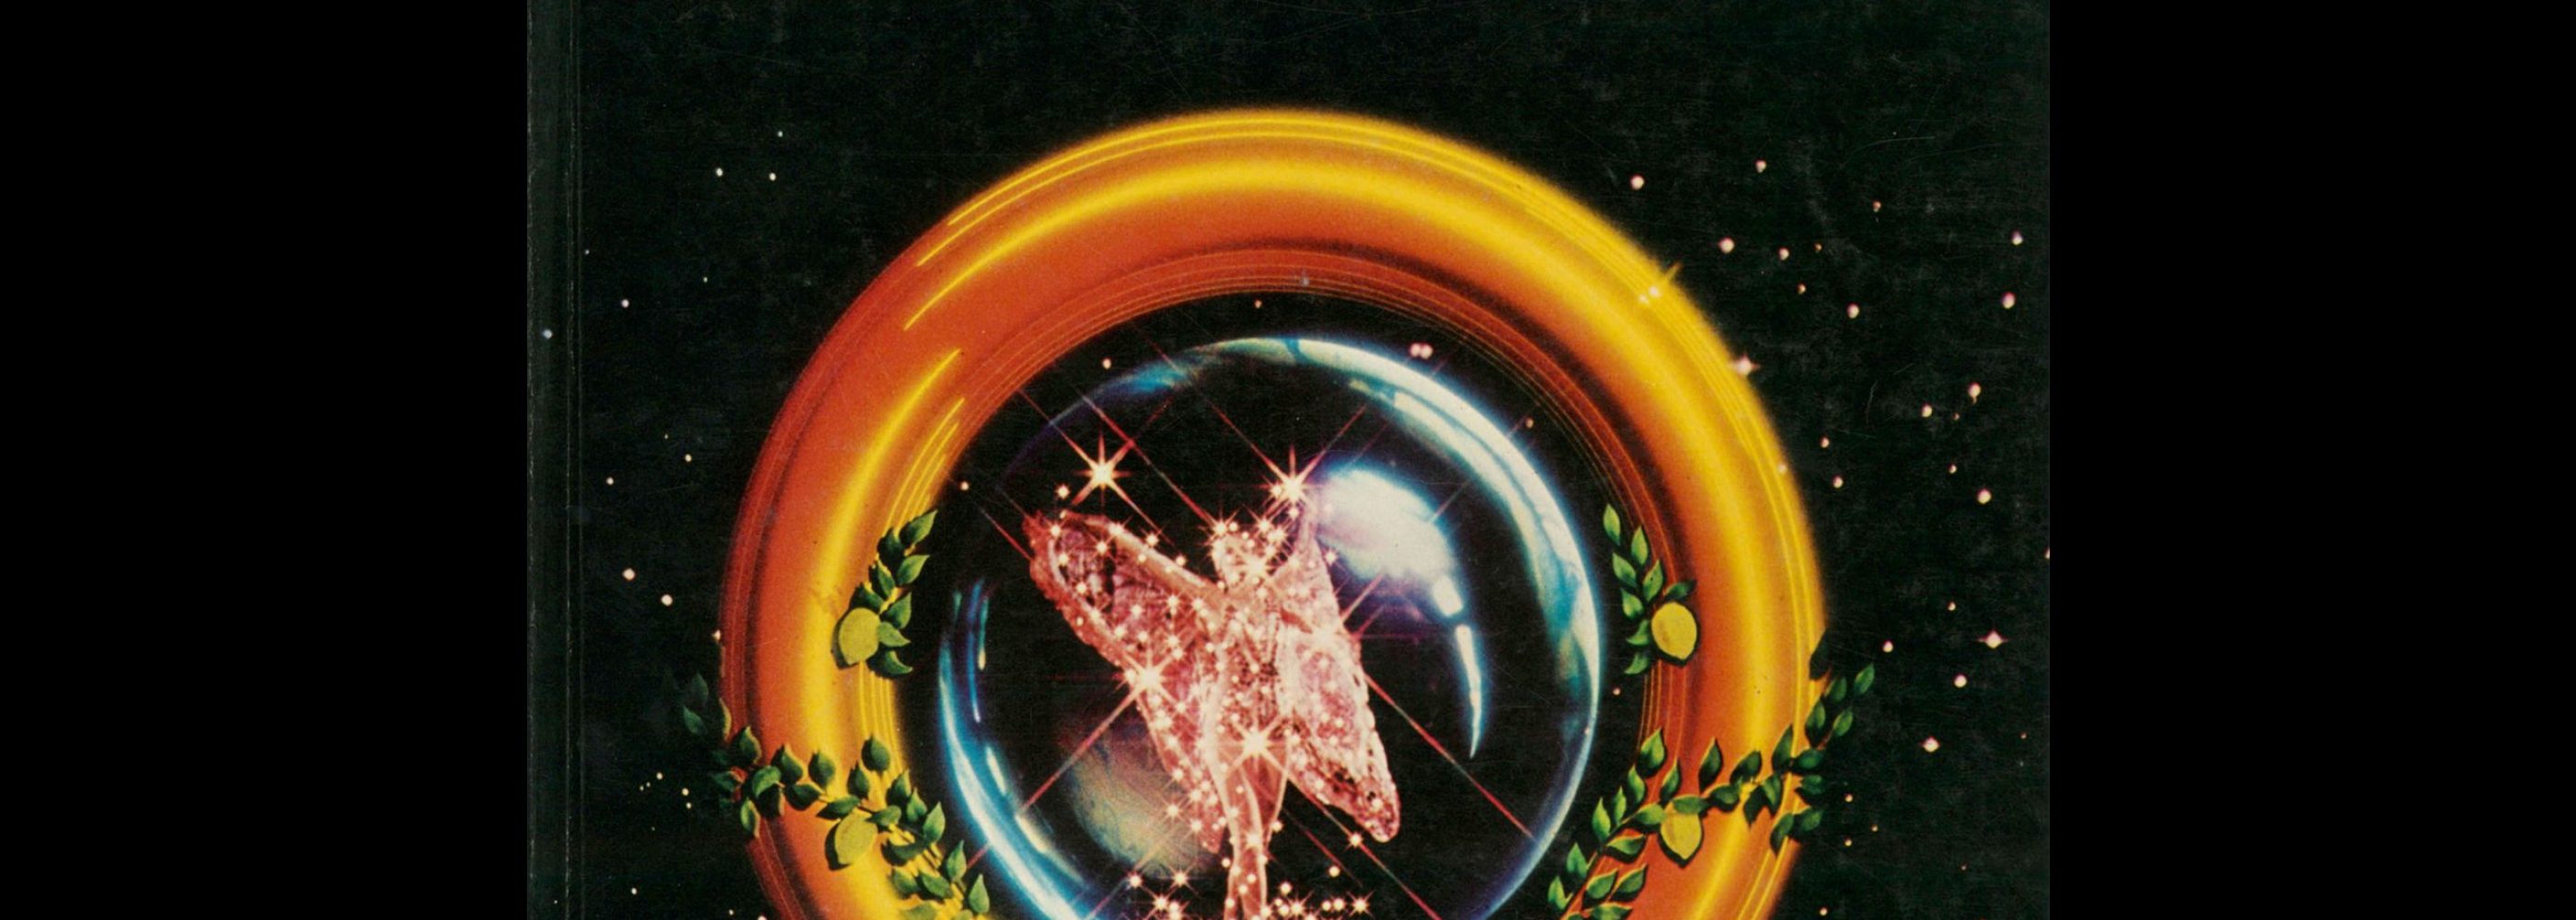 Novum Gebrauchsgraphik, 8, 1976. Cover design by Richard Taylor and Wayne Kimbell